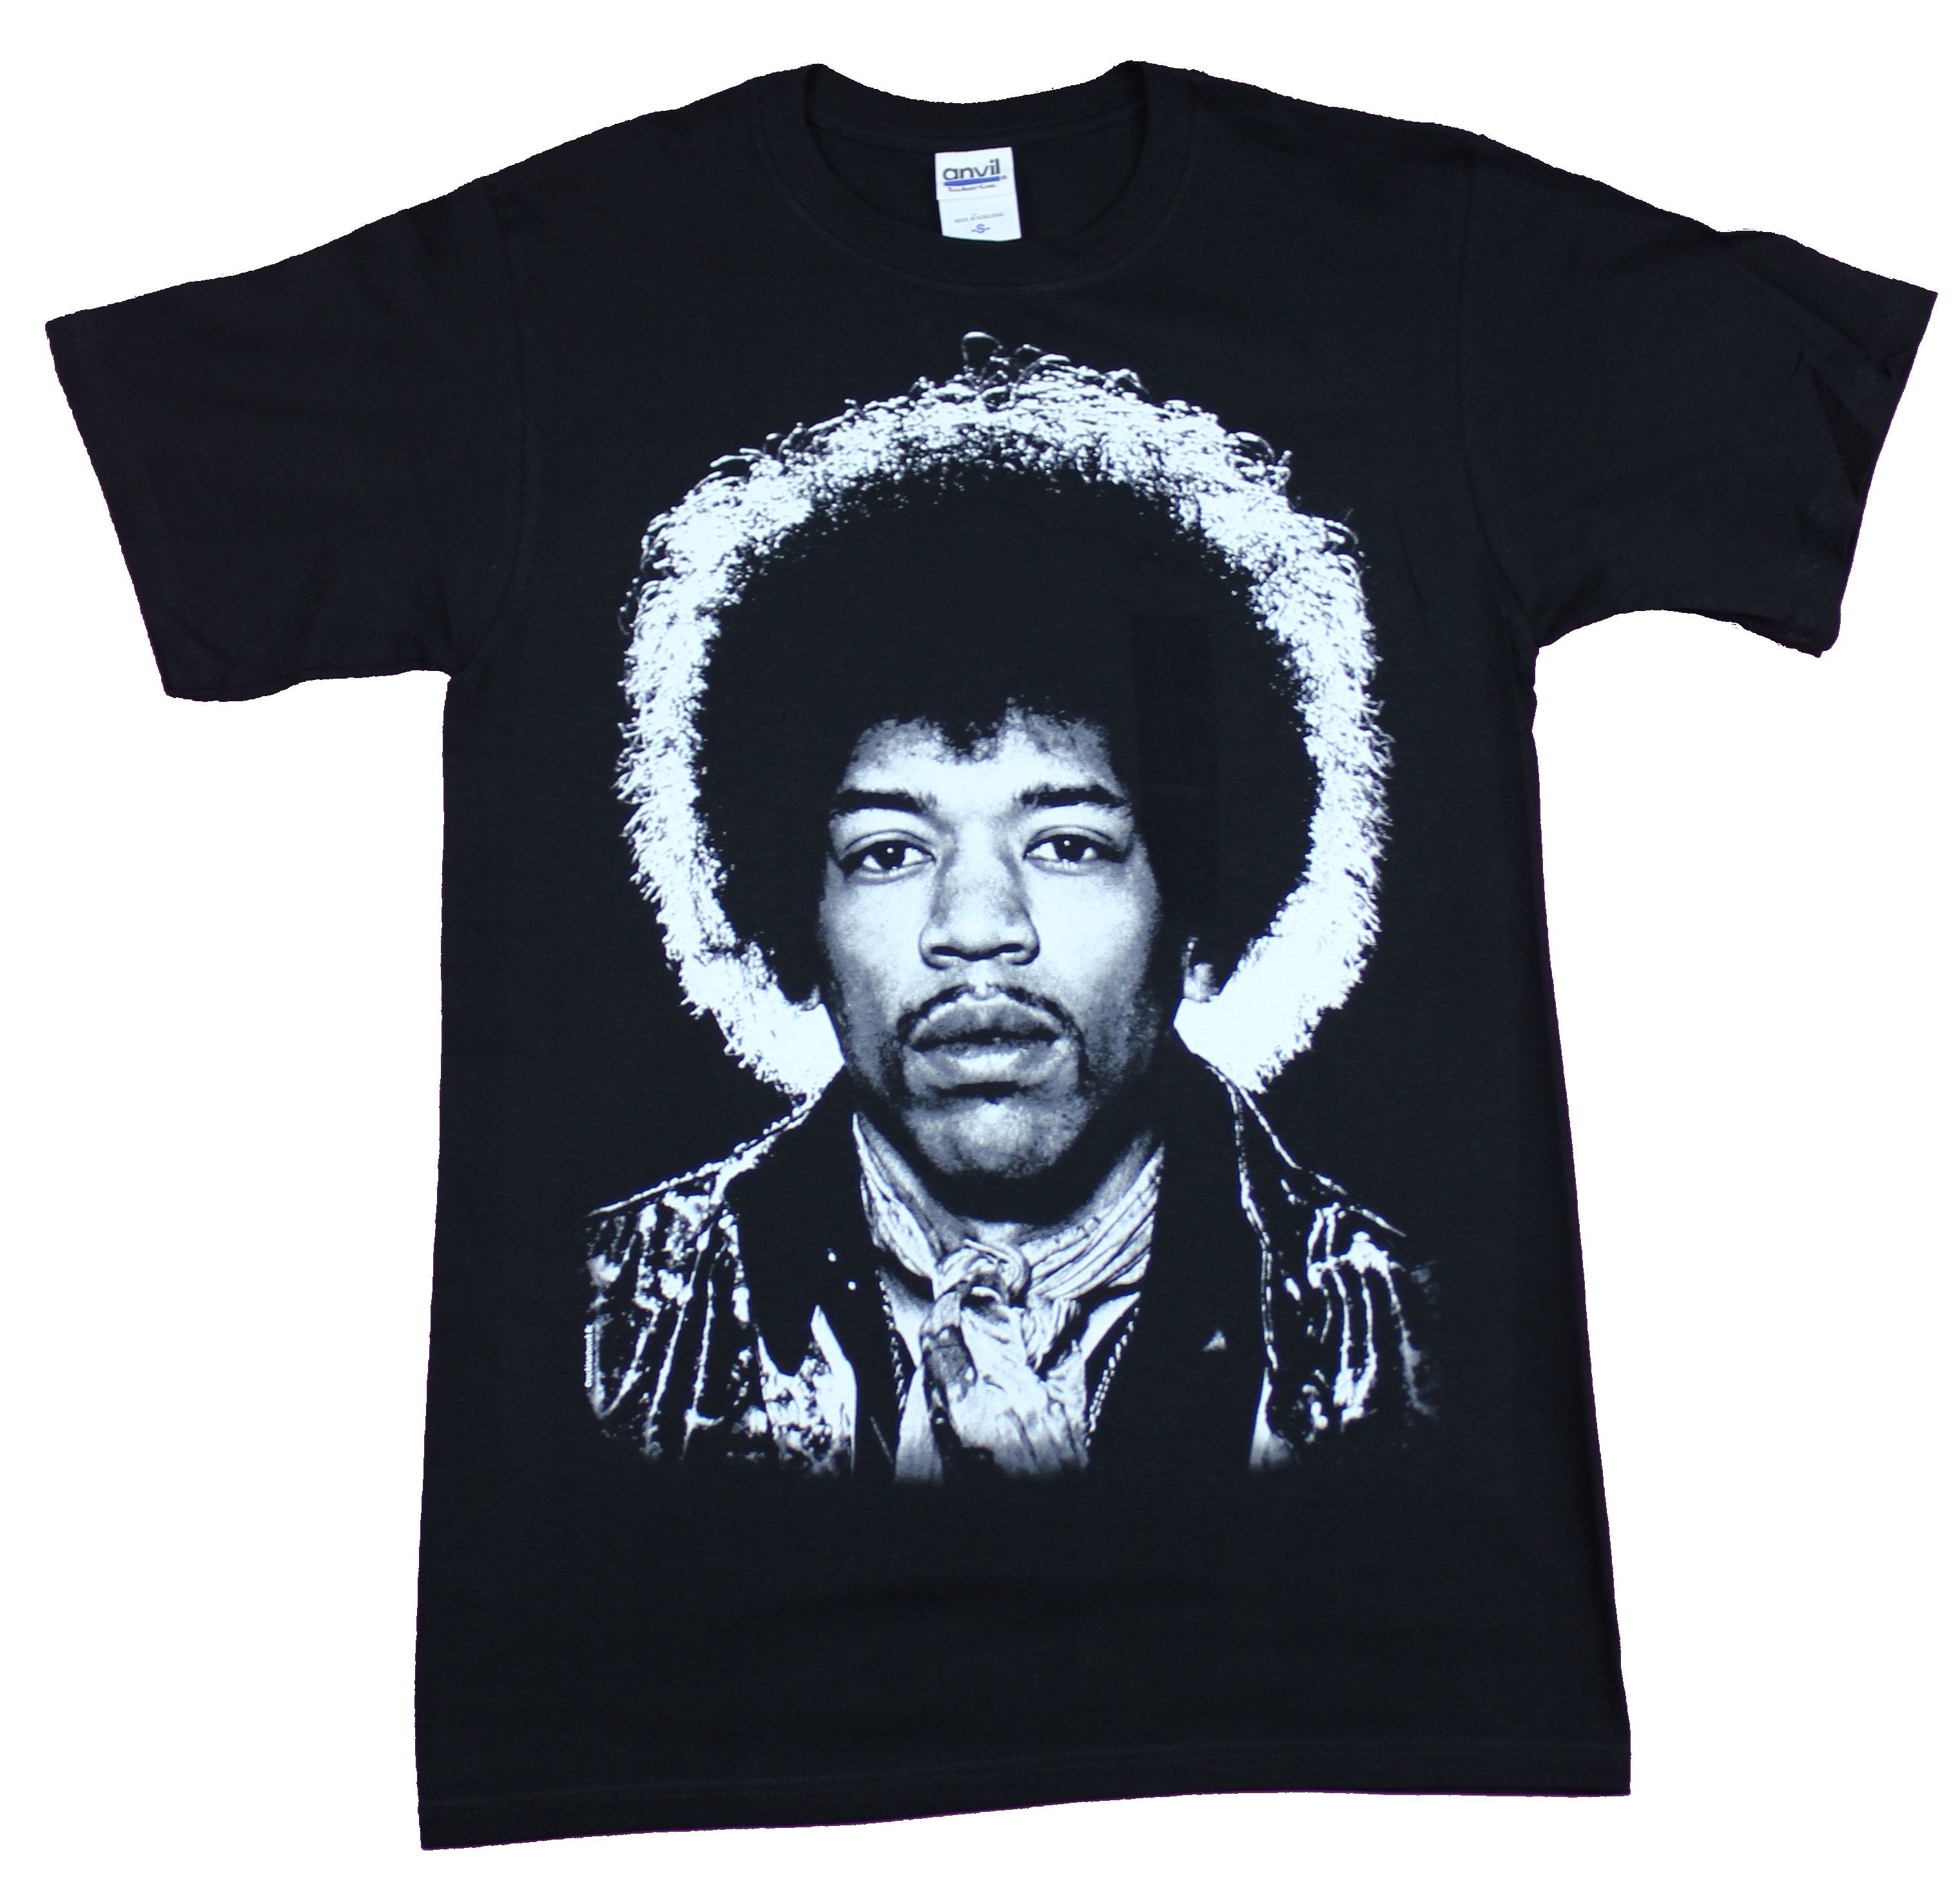 Jimi Hendrix Mens T-Shirt  - Black and White Serious Portrait Face Image